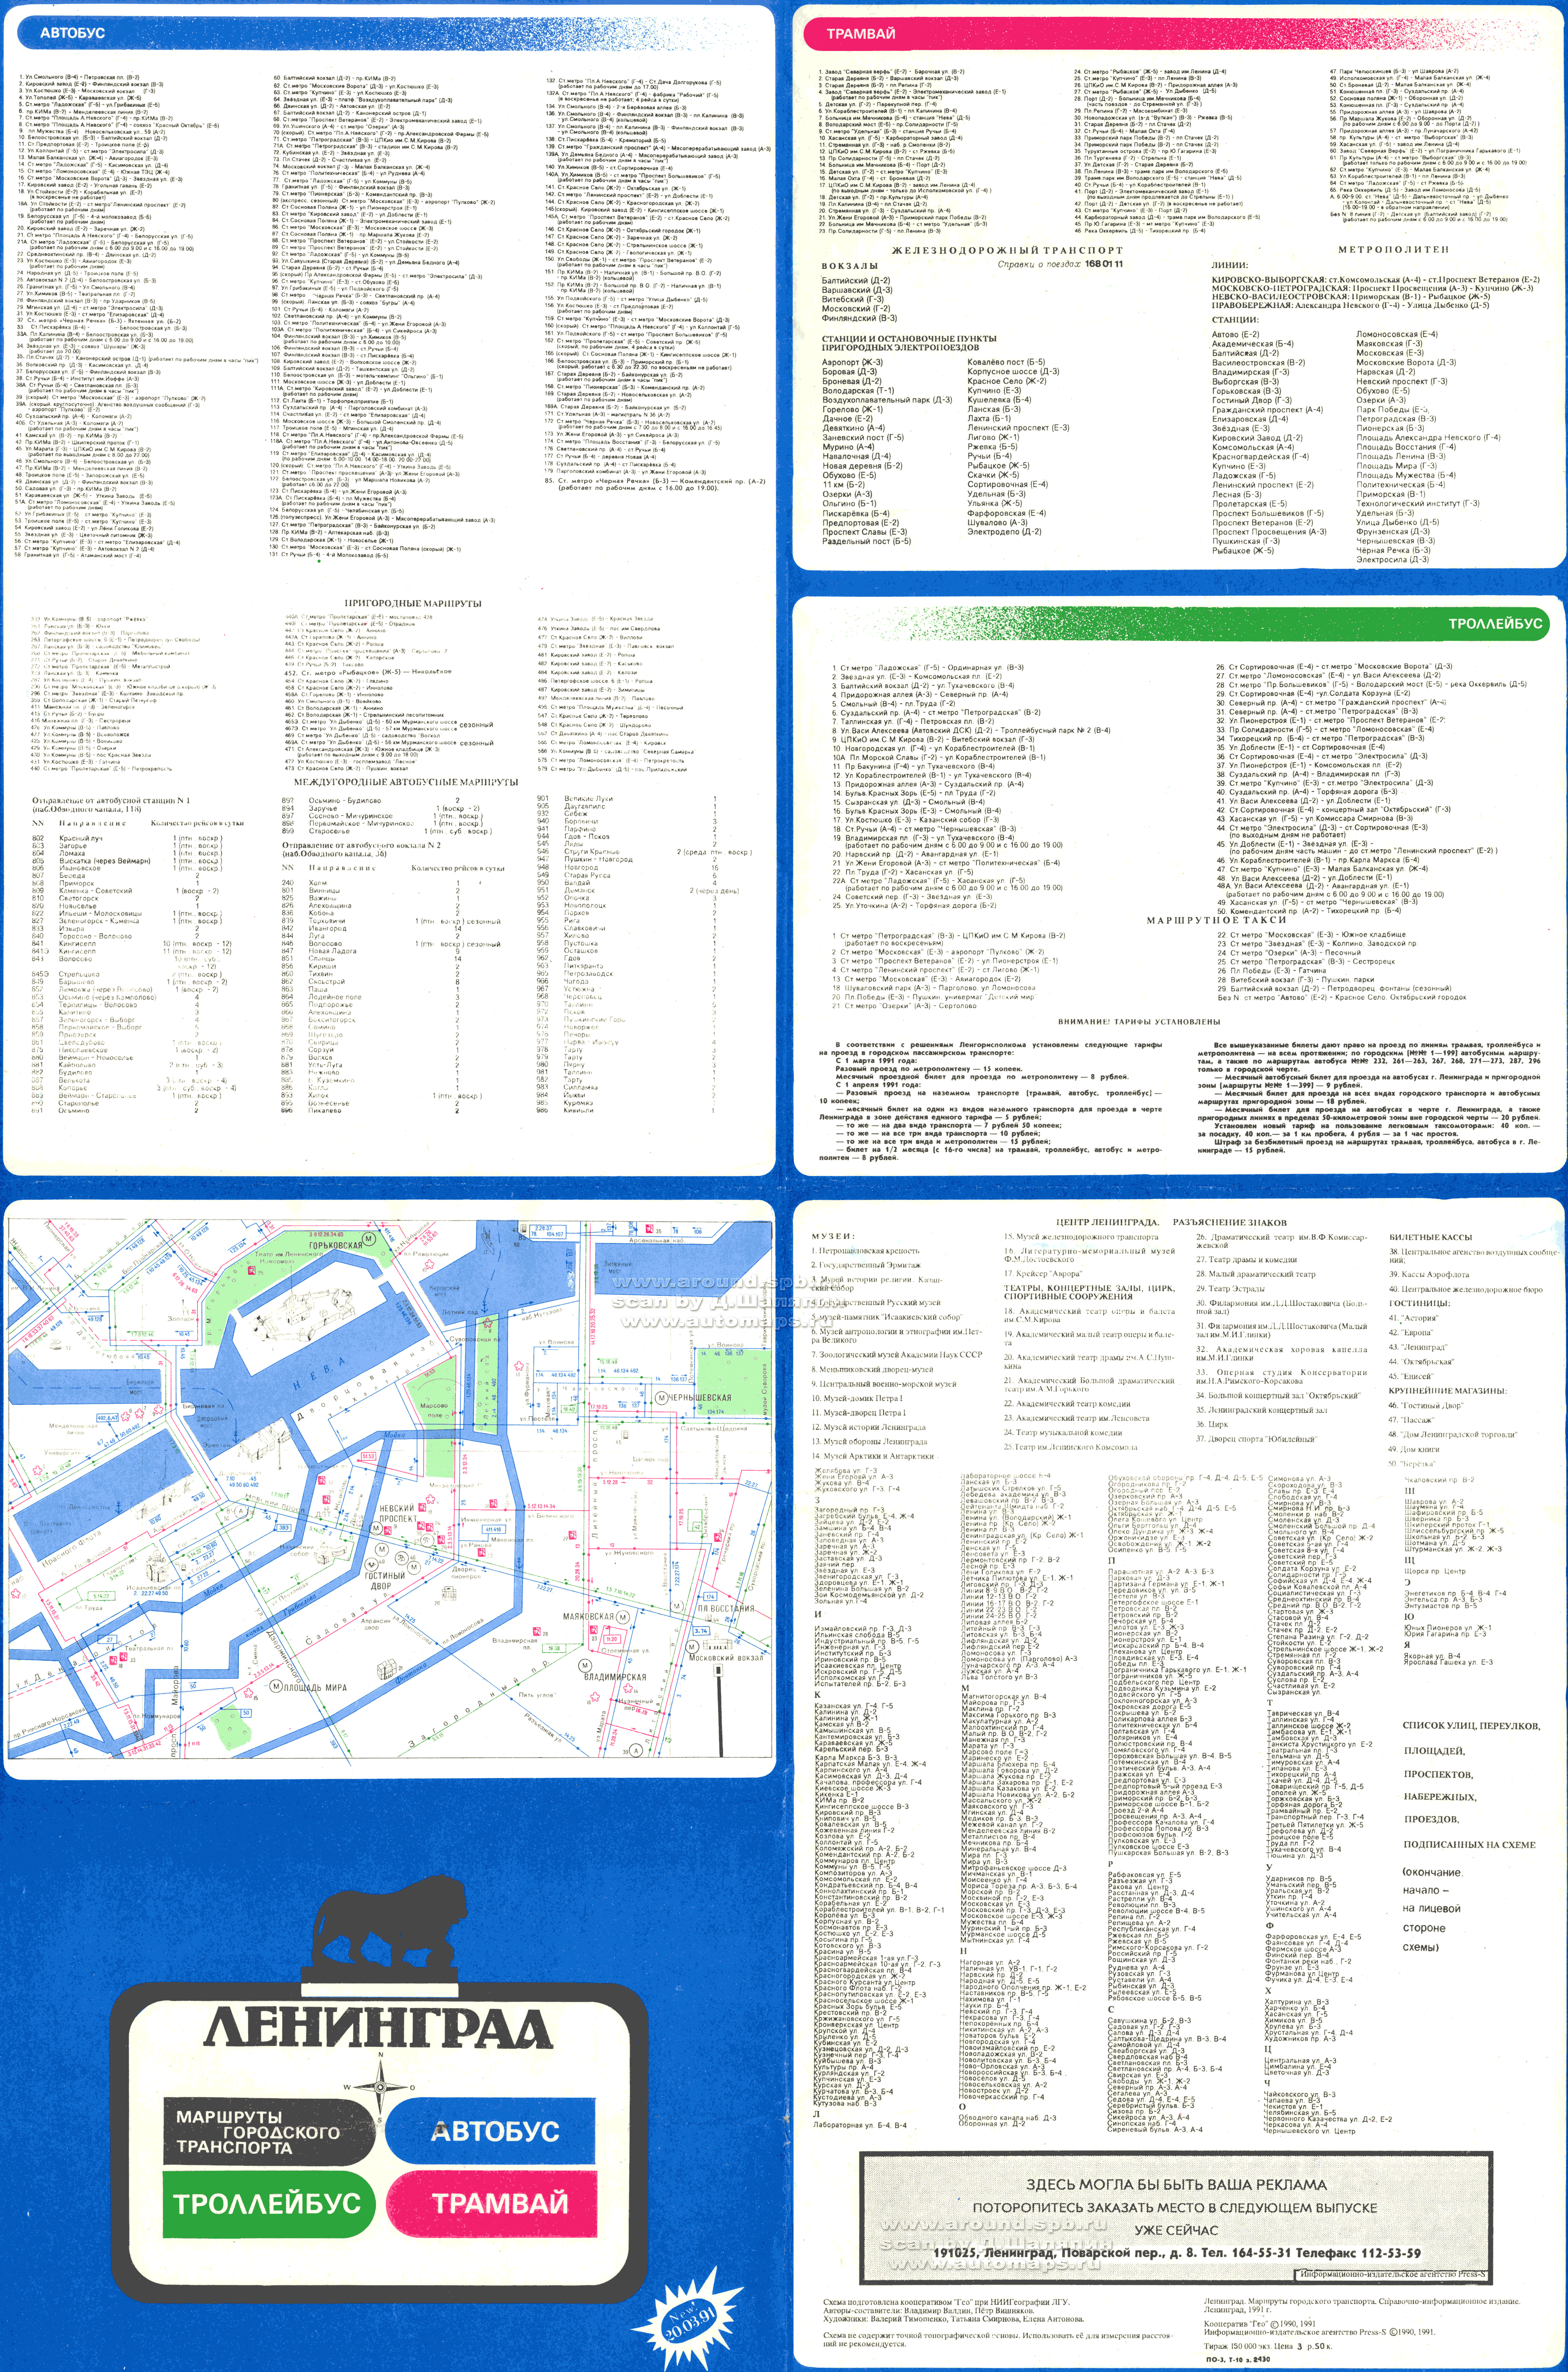 Sankt Peterburgas — Systemwide Maps